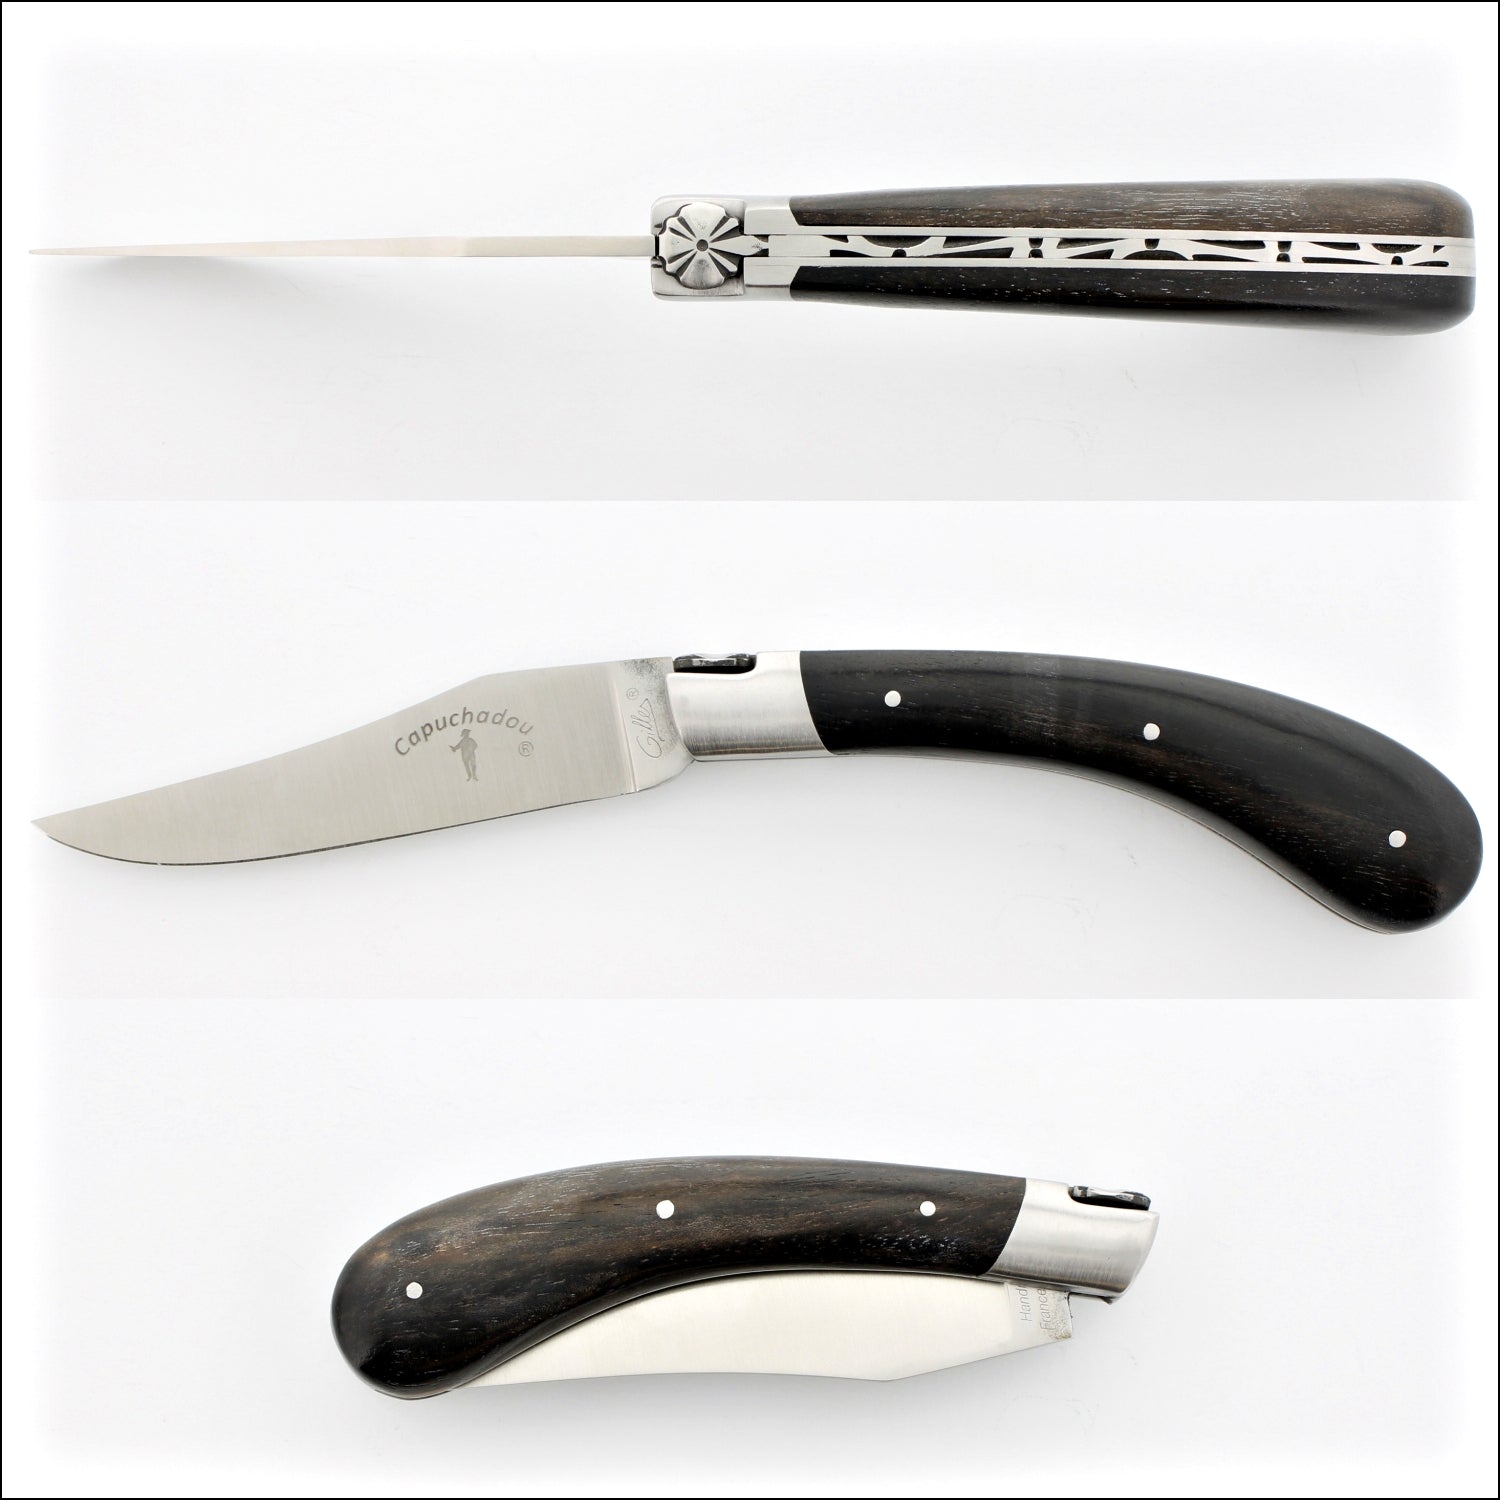 Capuchadou 12 cm Classic Folding Knife - Ebony